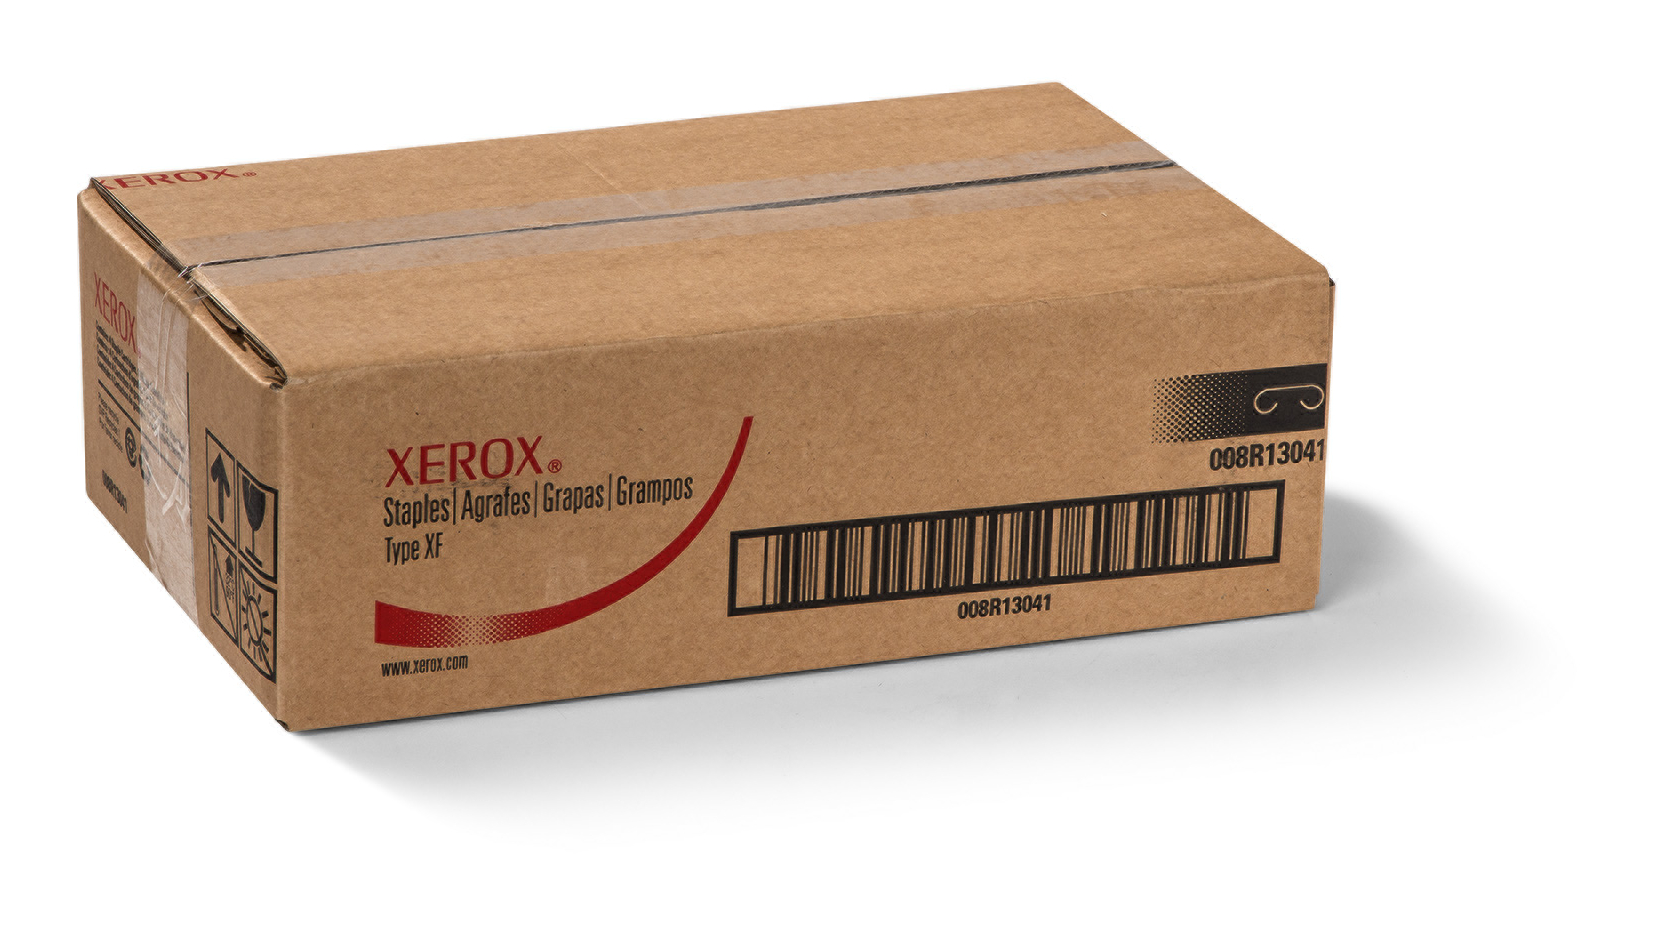 Xerox DocuColor 260 252 242 D95 D125 D110 Staple Cartridge Box of 4 8R13041 OEM 14445636854 